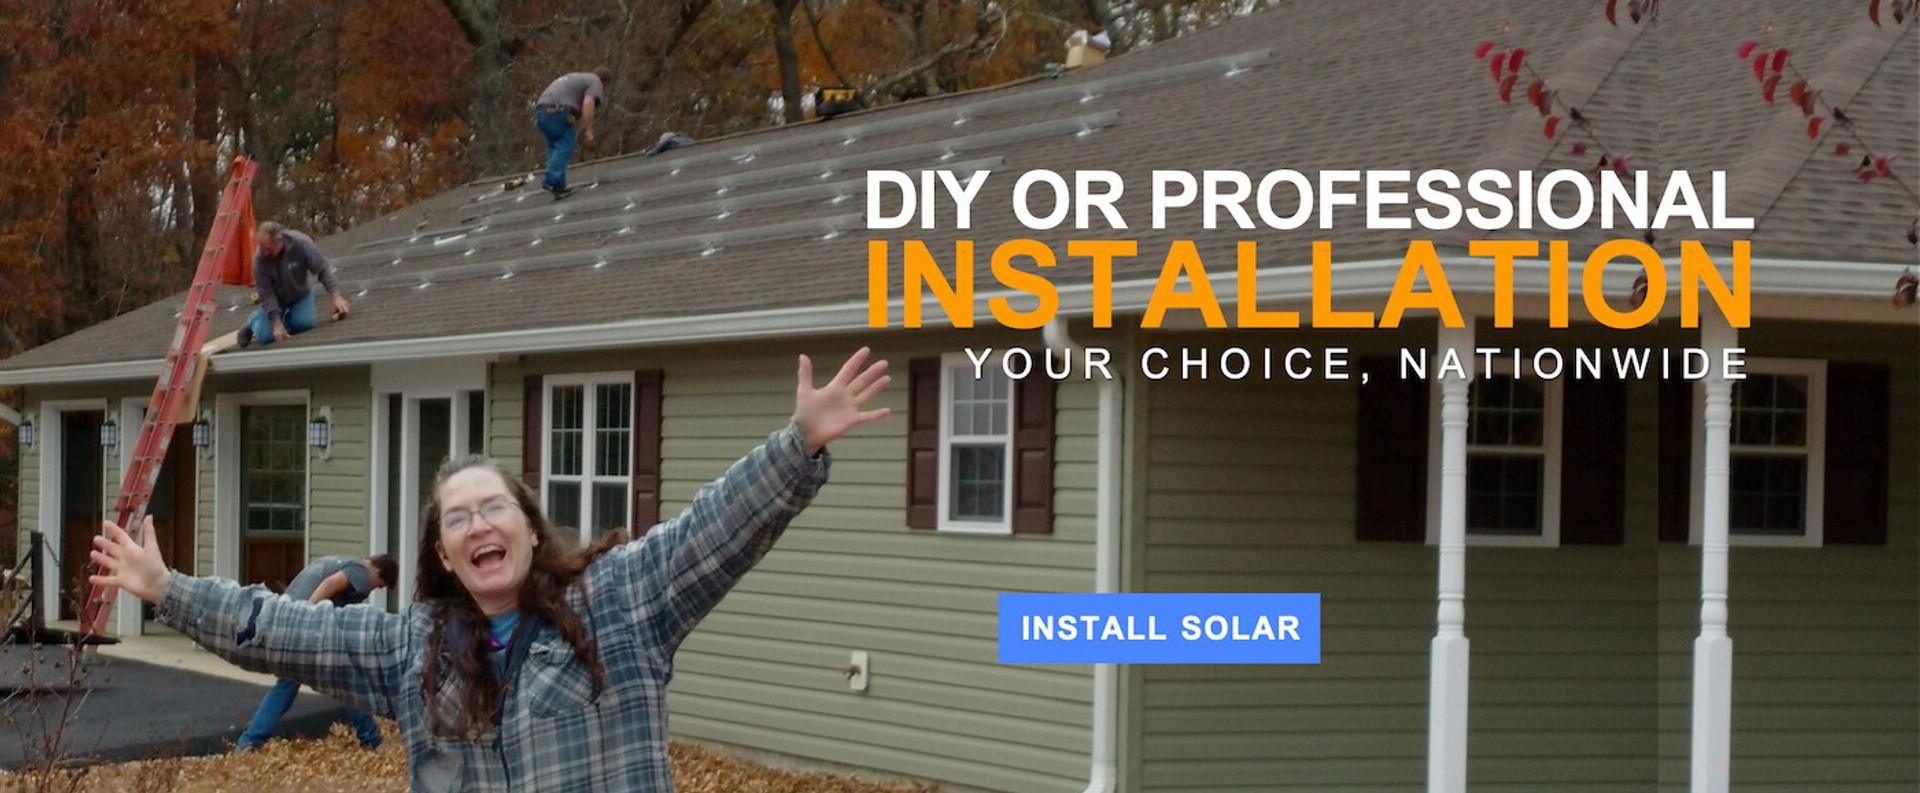 DIY or PRO solar installation